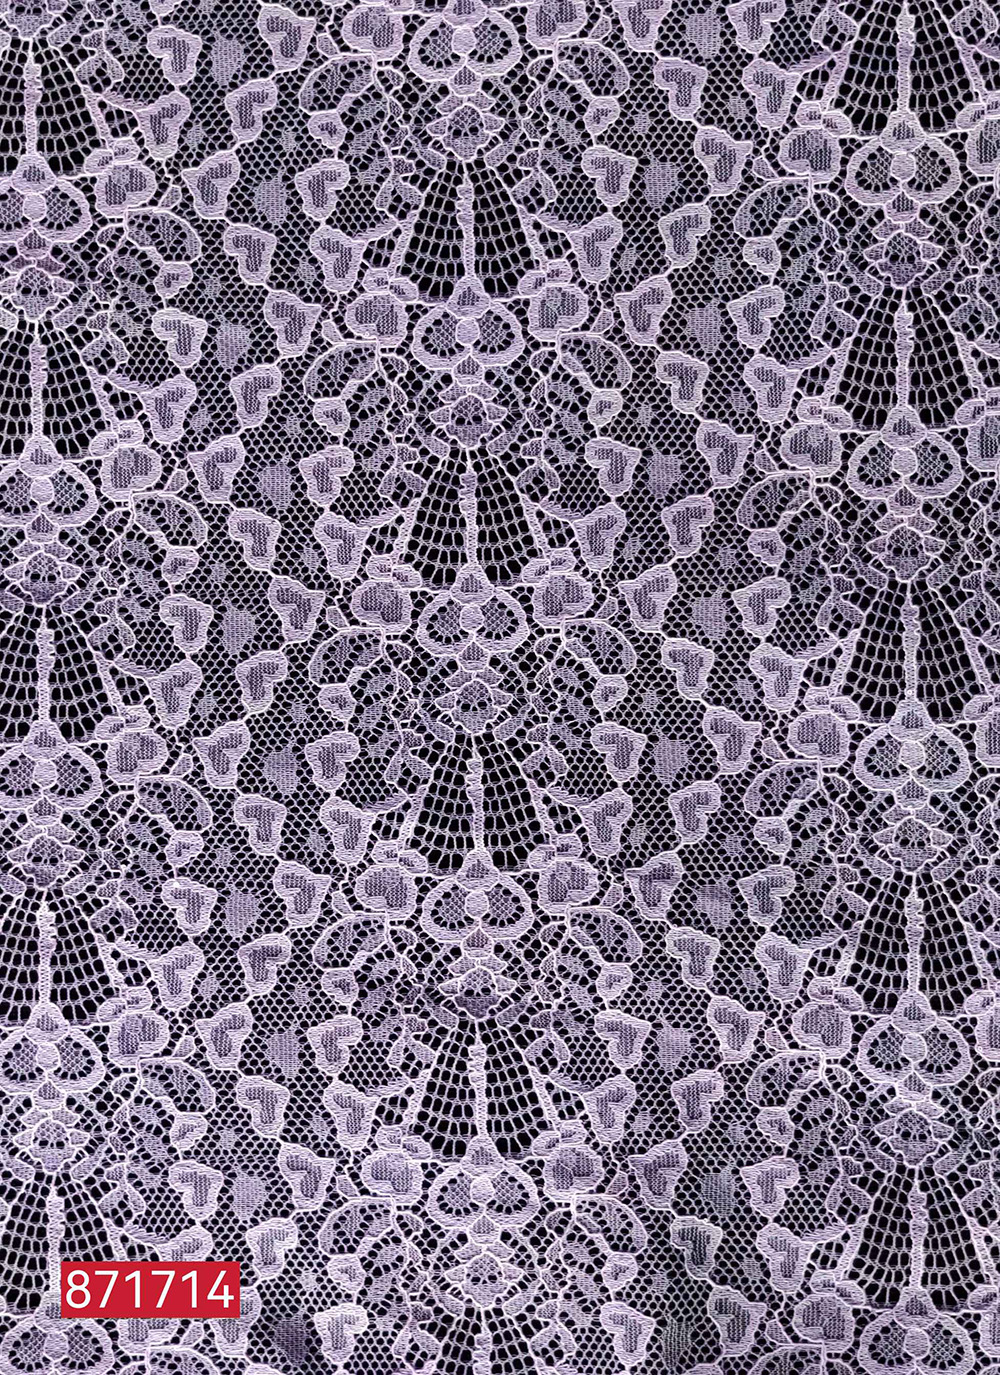 Lizhiying lace fabric love element fabric DIY fabric, ingenuity and elaborate production